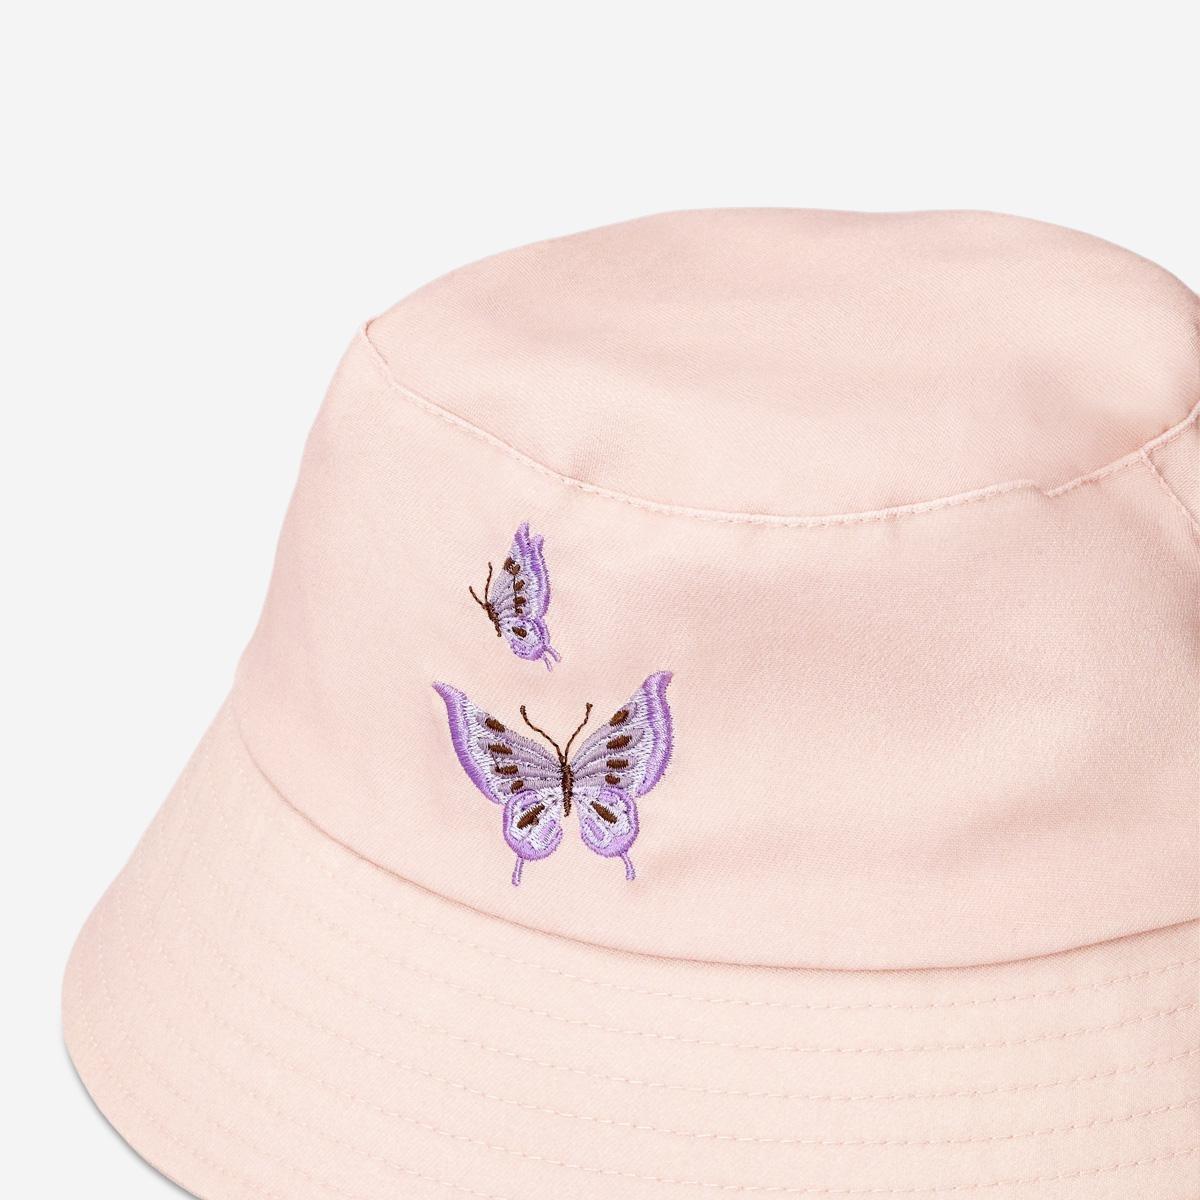 Pink bucket hat